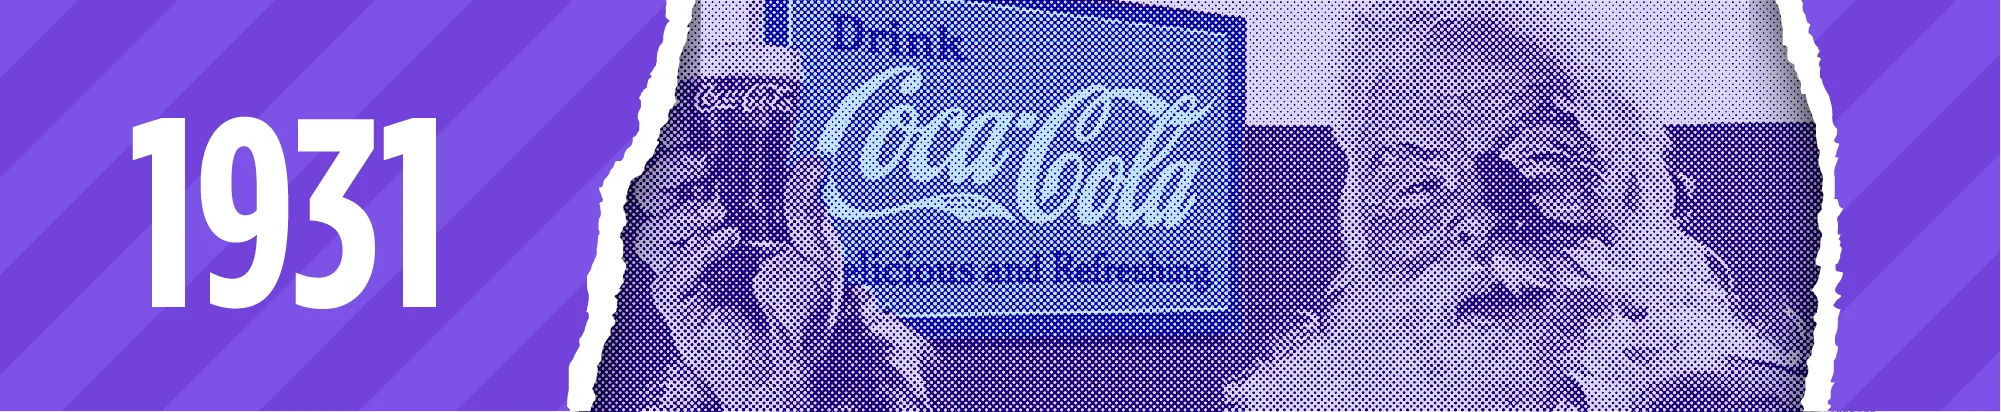 https://cms-wp.bigcommerce.com/wp-content/uploads/2017/11/1931-Coke-150holiday.png